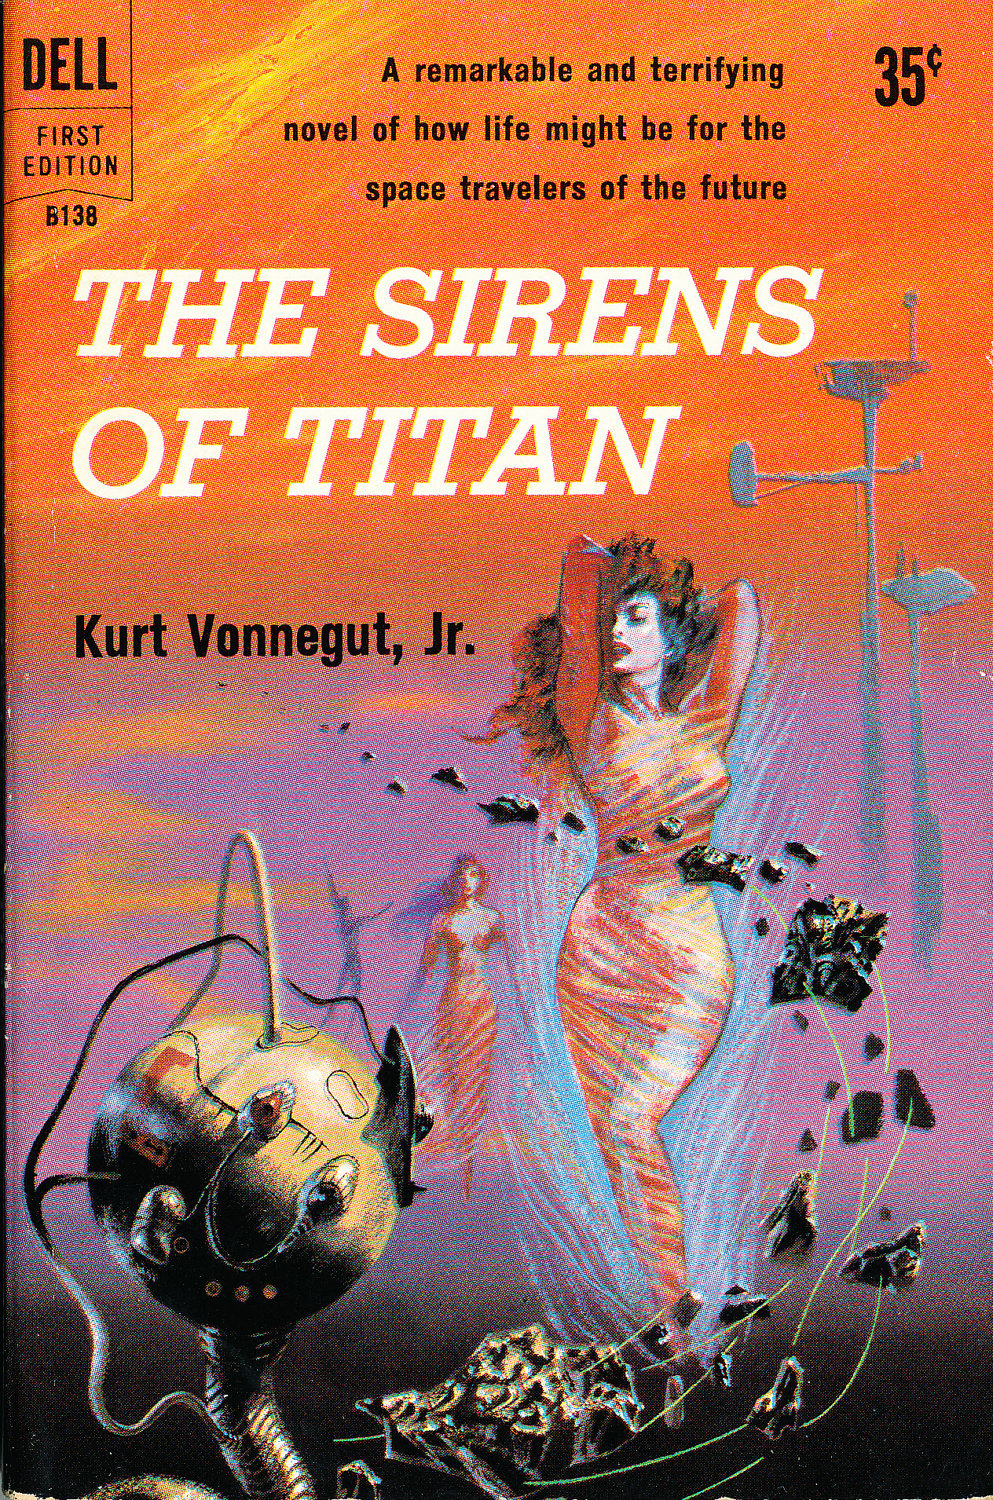 The sirens of Titan